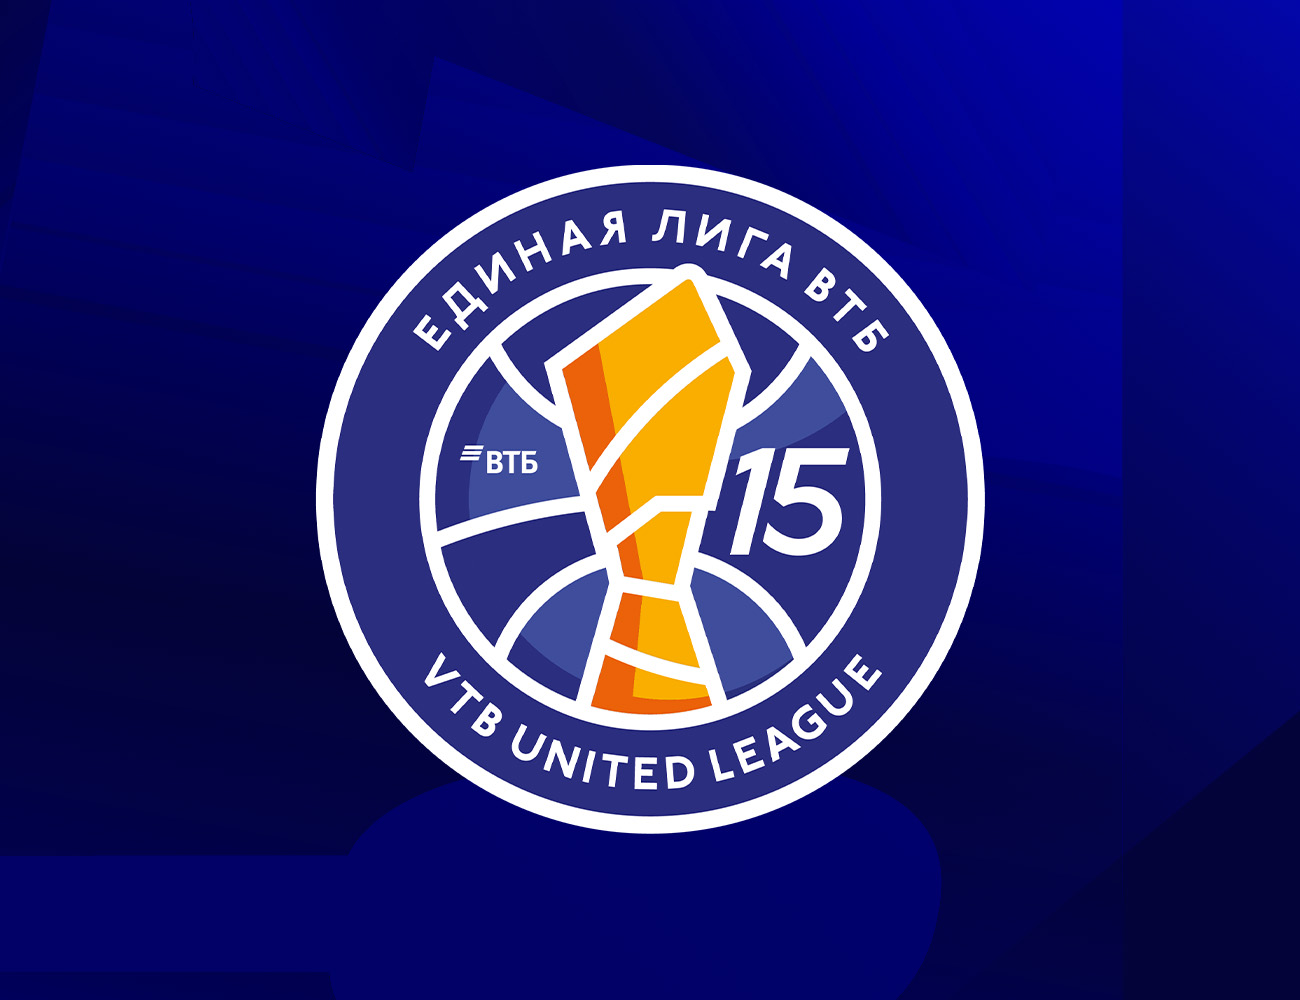 The League Directorate announces the postponement of Pari Nizhny Novgorod – UNICS game